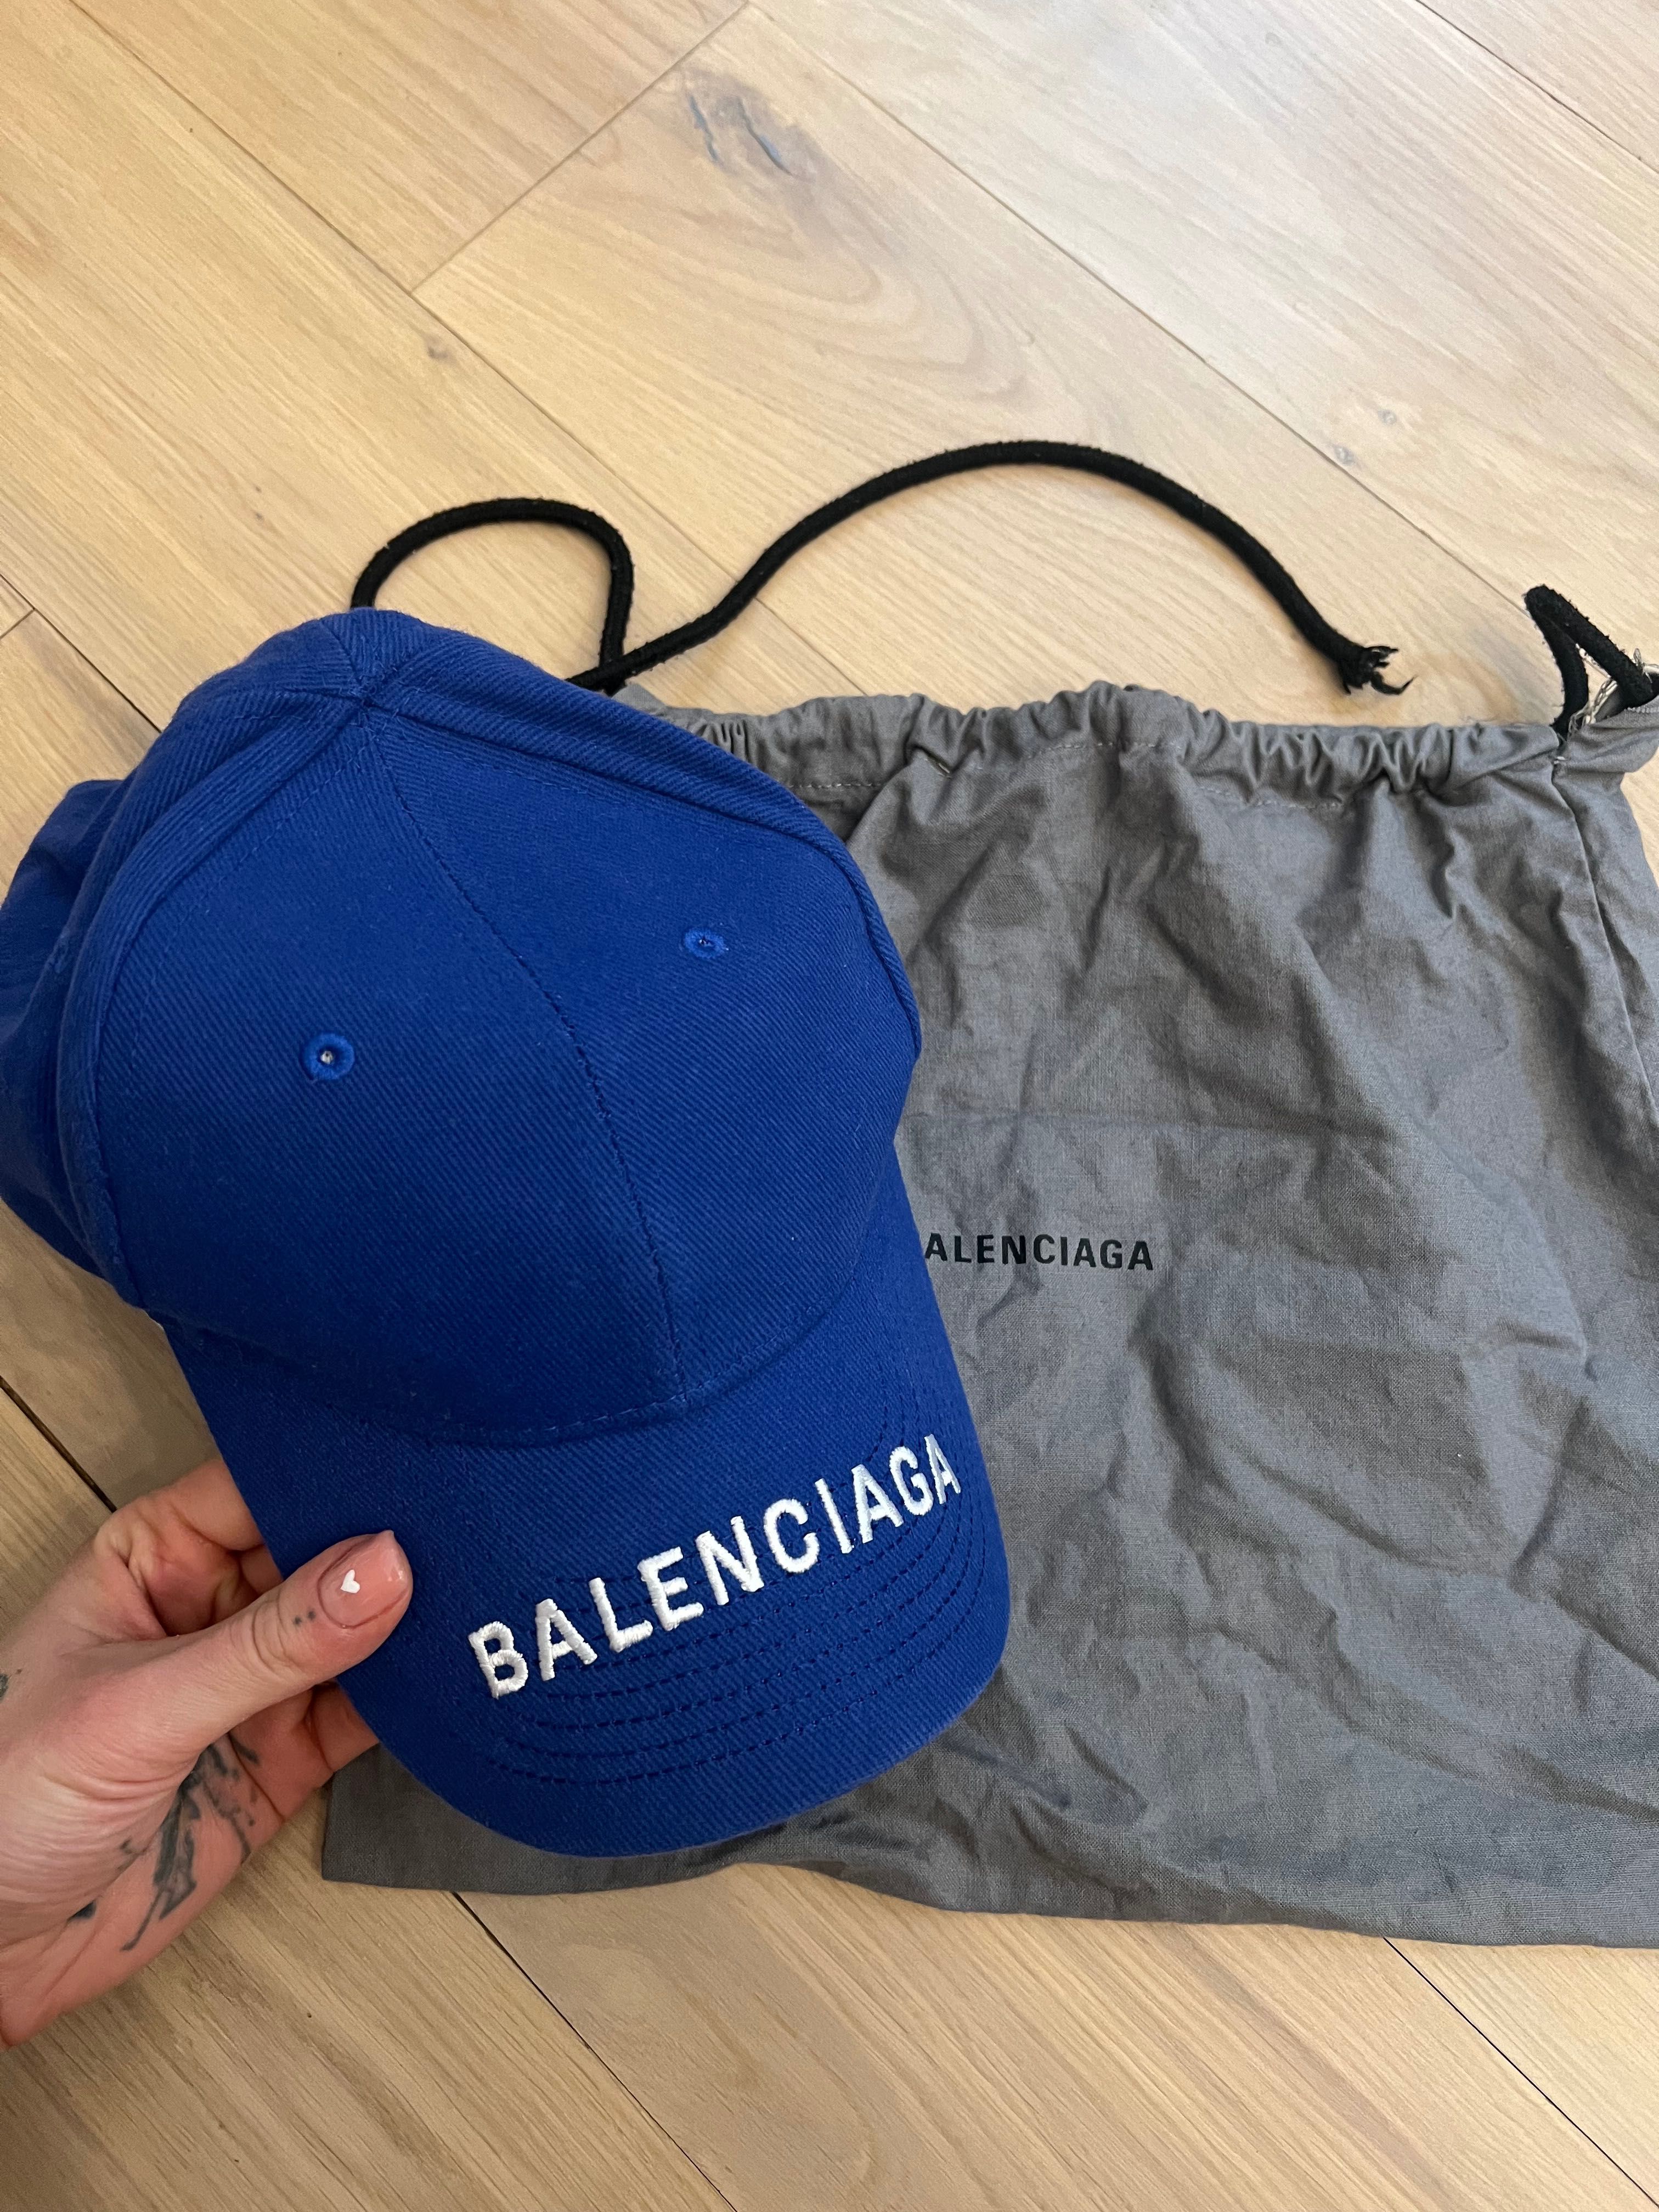 Balenciaga czapka blue hat